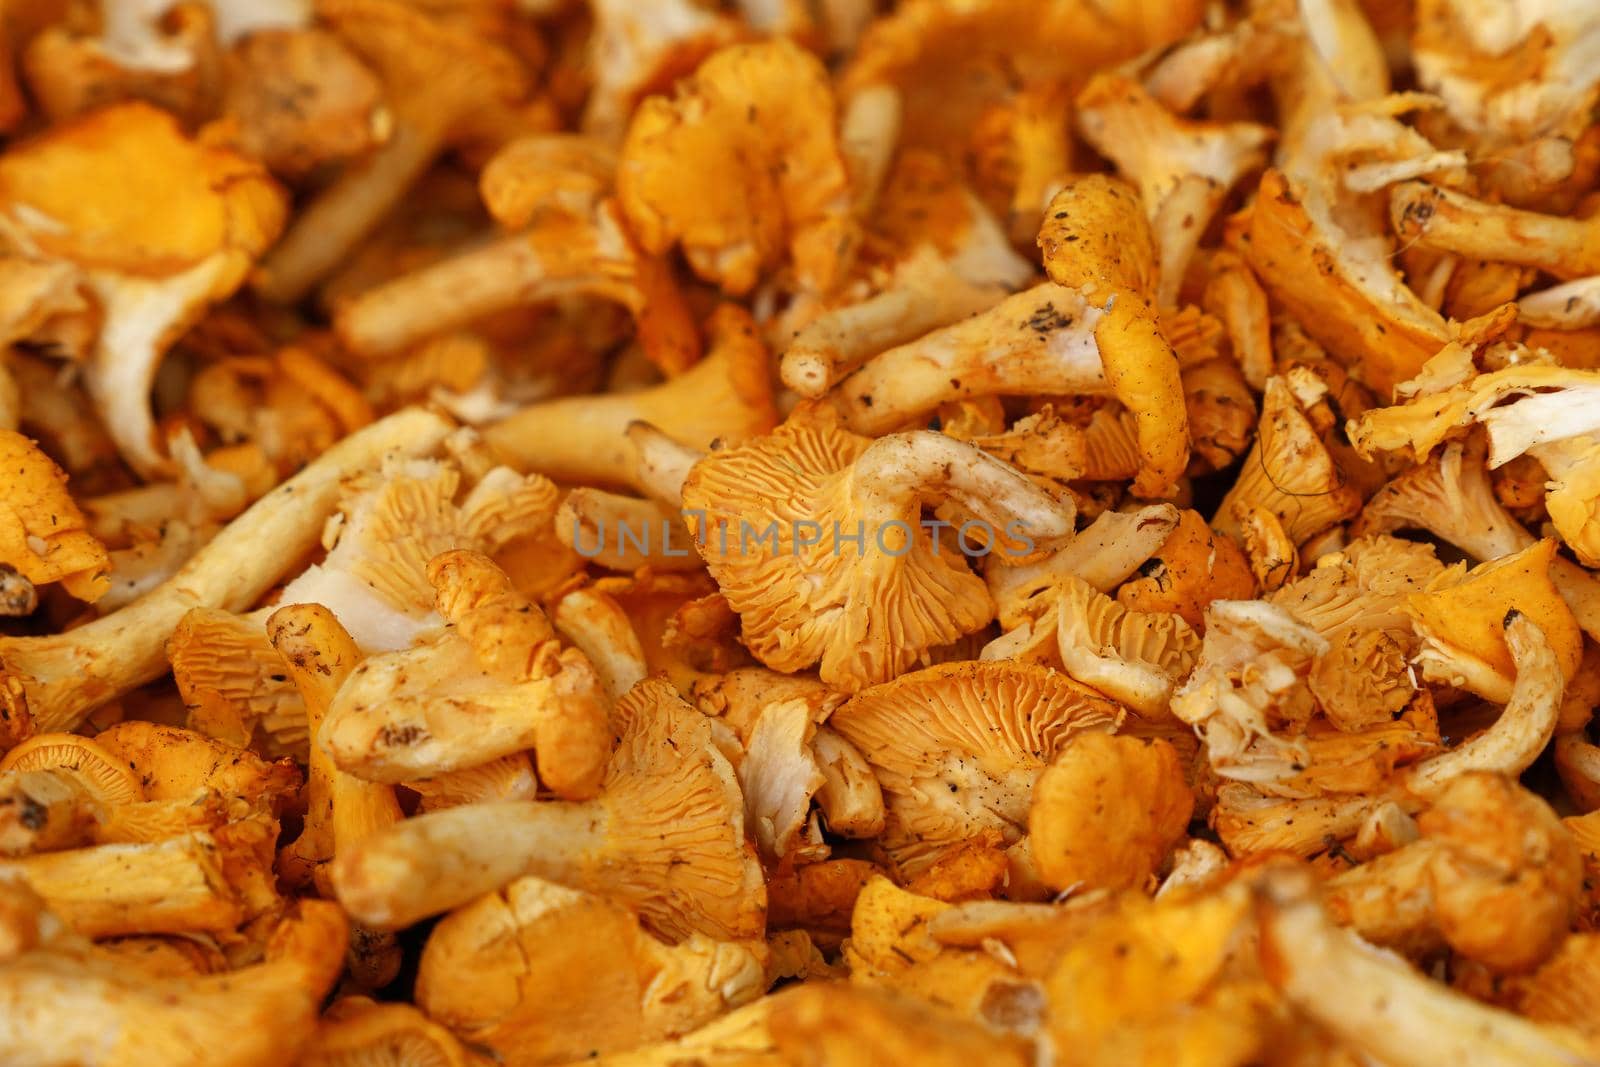 Close up yellow chanterelle edible mushrooms (Cantharellus cibarius) at retail display, high angle view